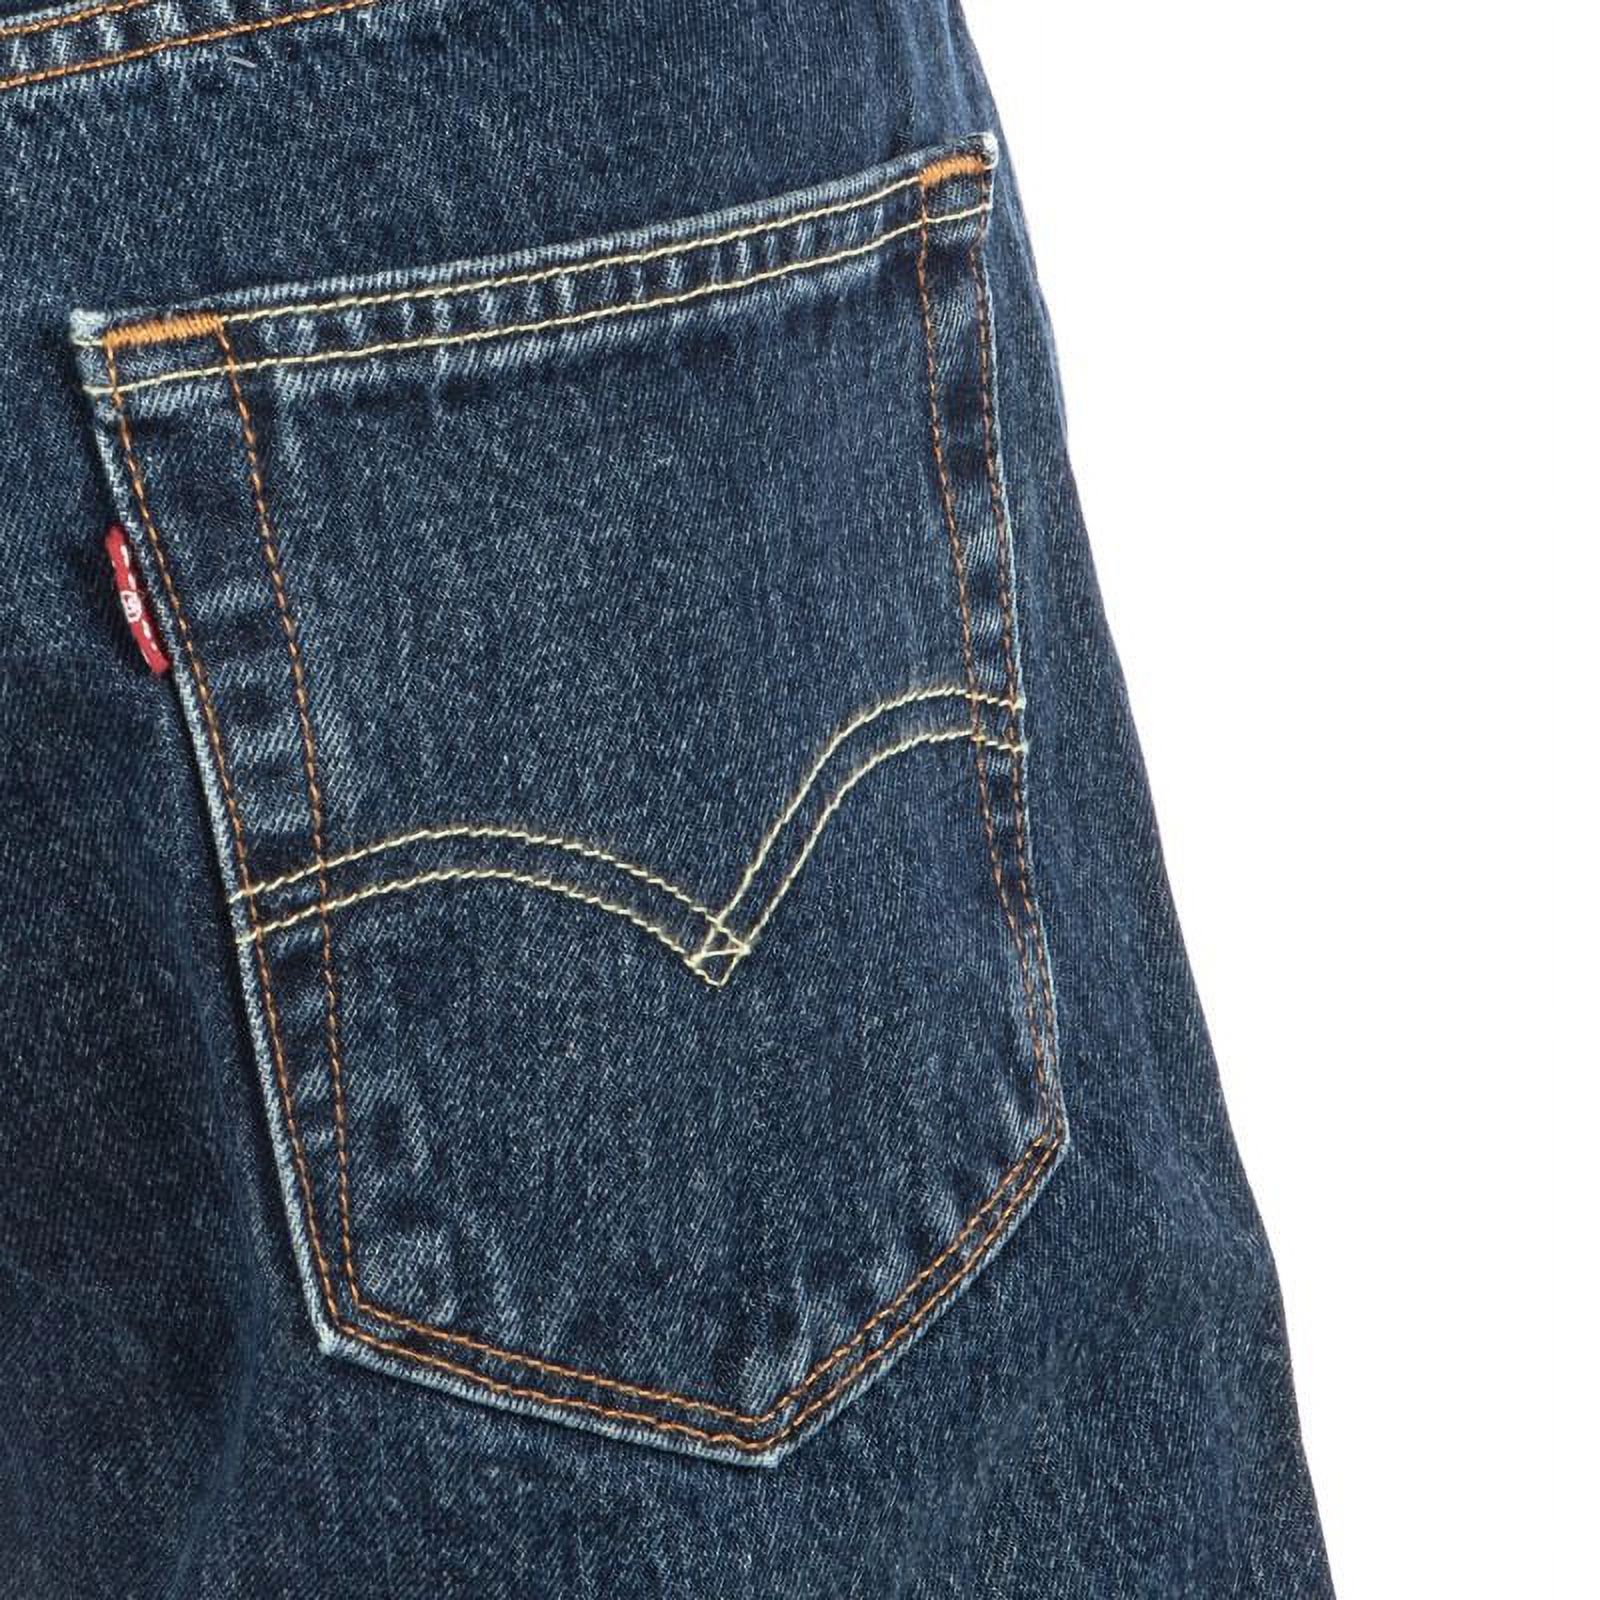 Levi's Men's 505 Regular Fit Jeans - image 2 of 5